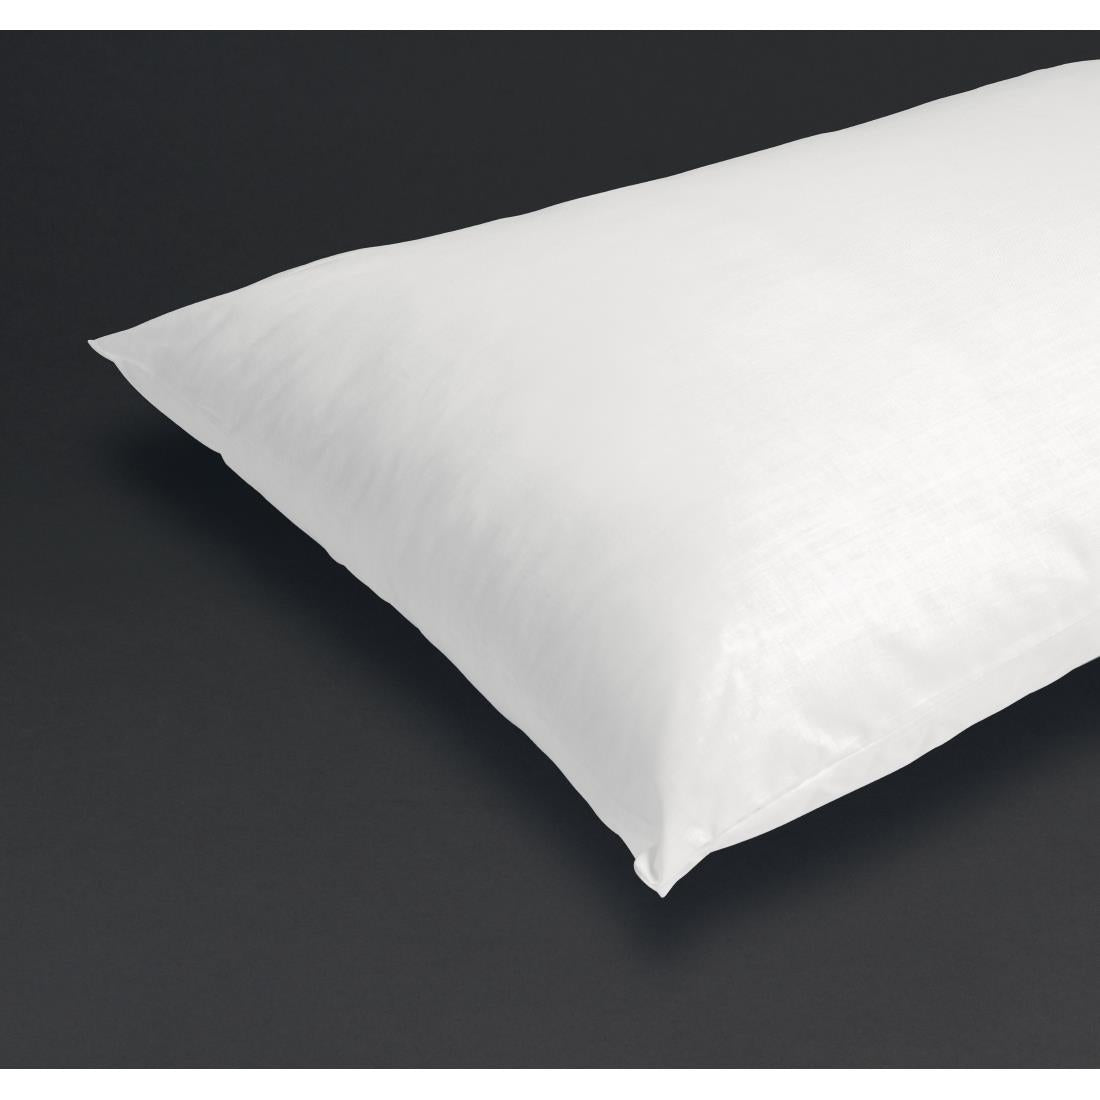 GT891 Mitre Comfort Superbounce Pillow